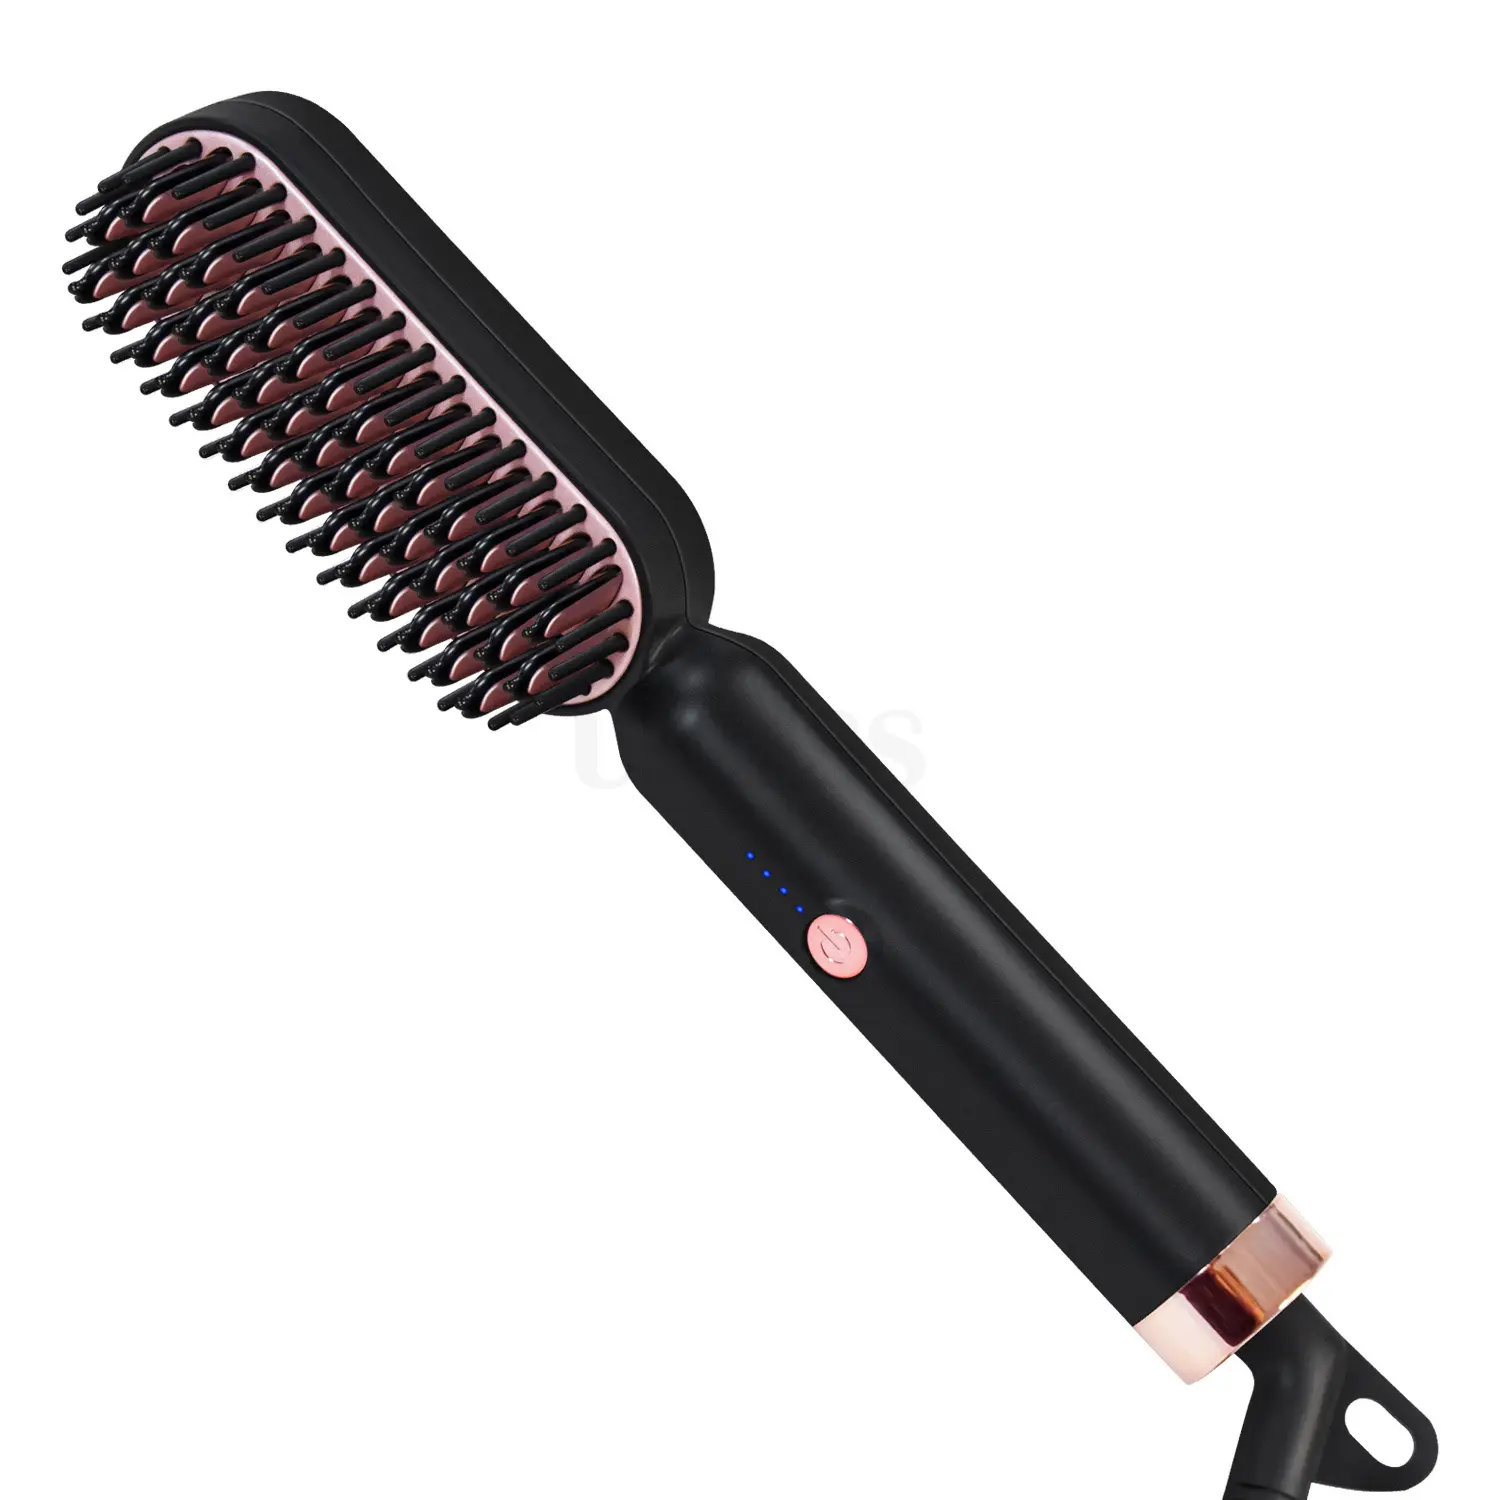 Multifunctional straightener straightener brush electric curling heat brush comb straightener curler hair fast modeling tool YY